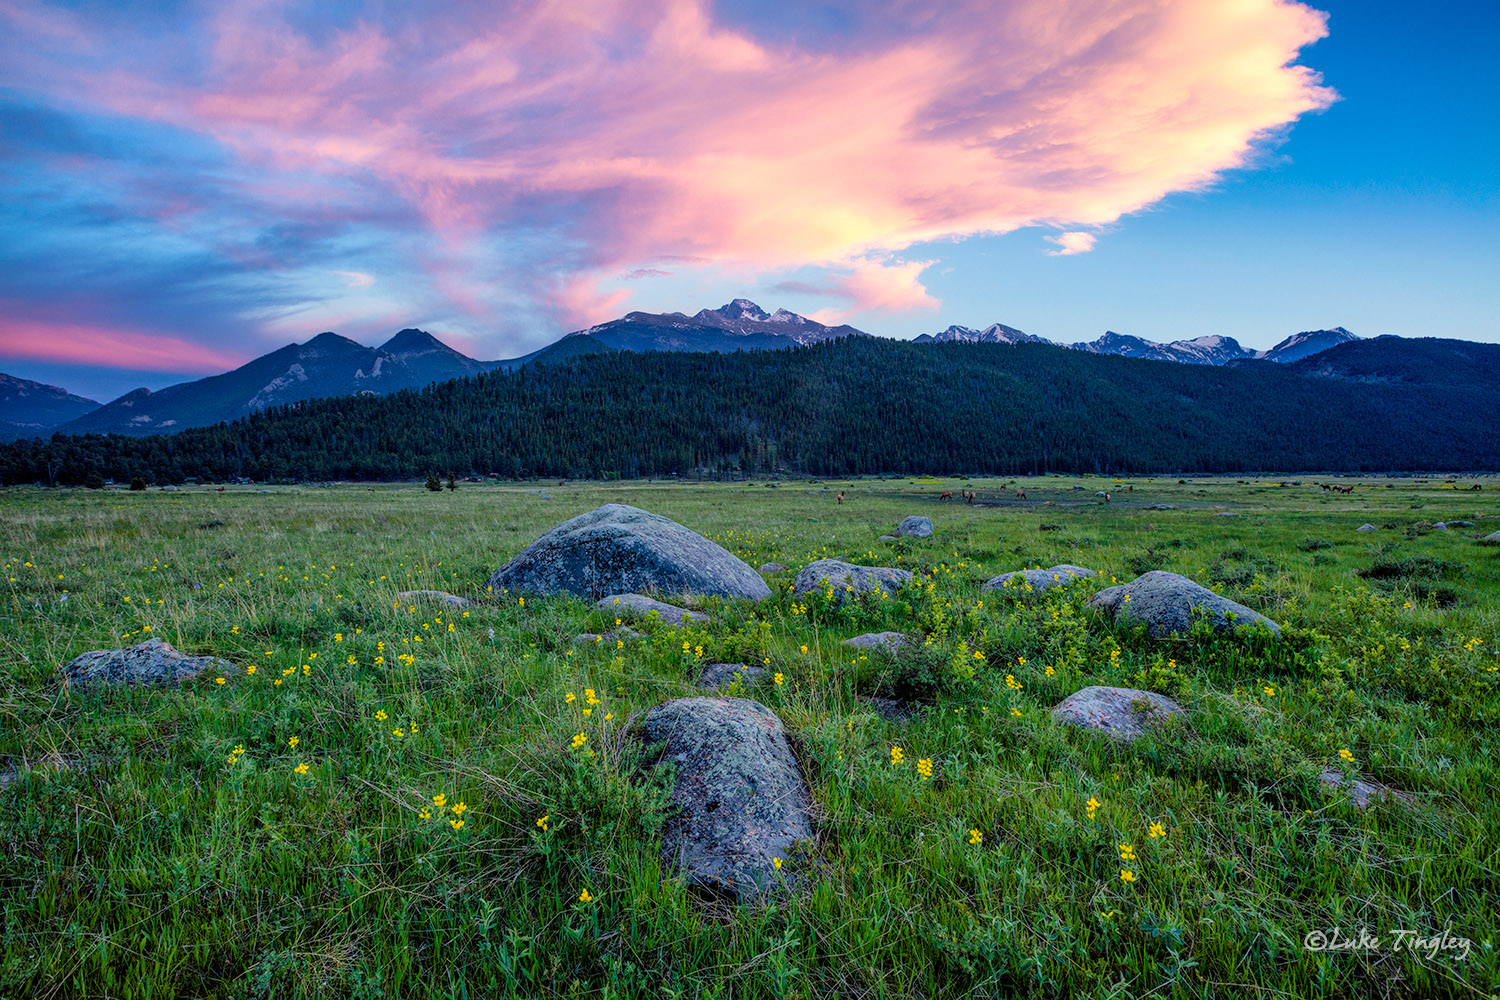 Camping, Golden Banner, June, Longs Peak, Moraine Park Meadows, RMNP, Rocky Mountain National Park, Summer, Yellow Flower, sunset